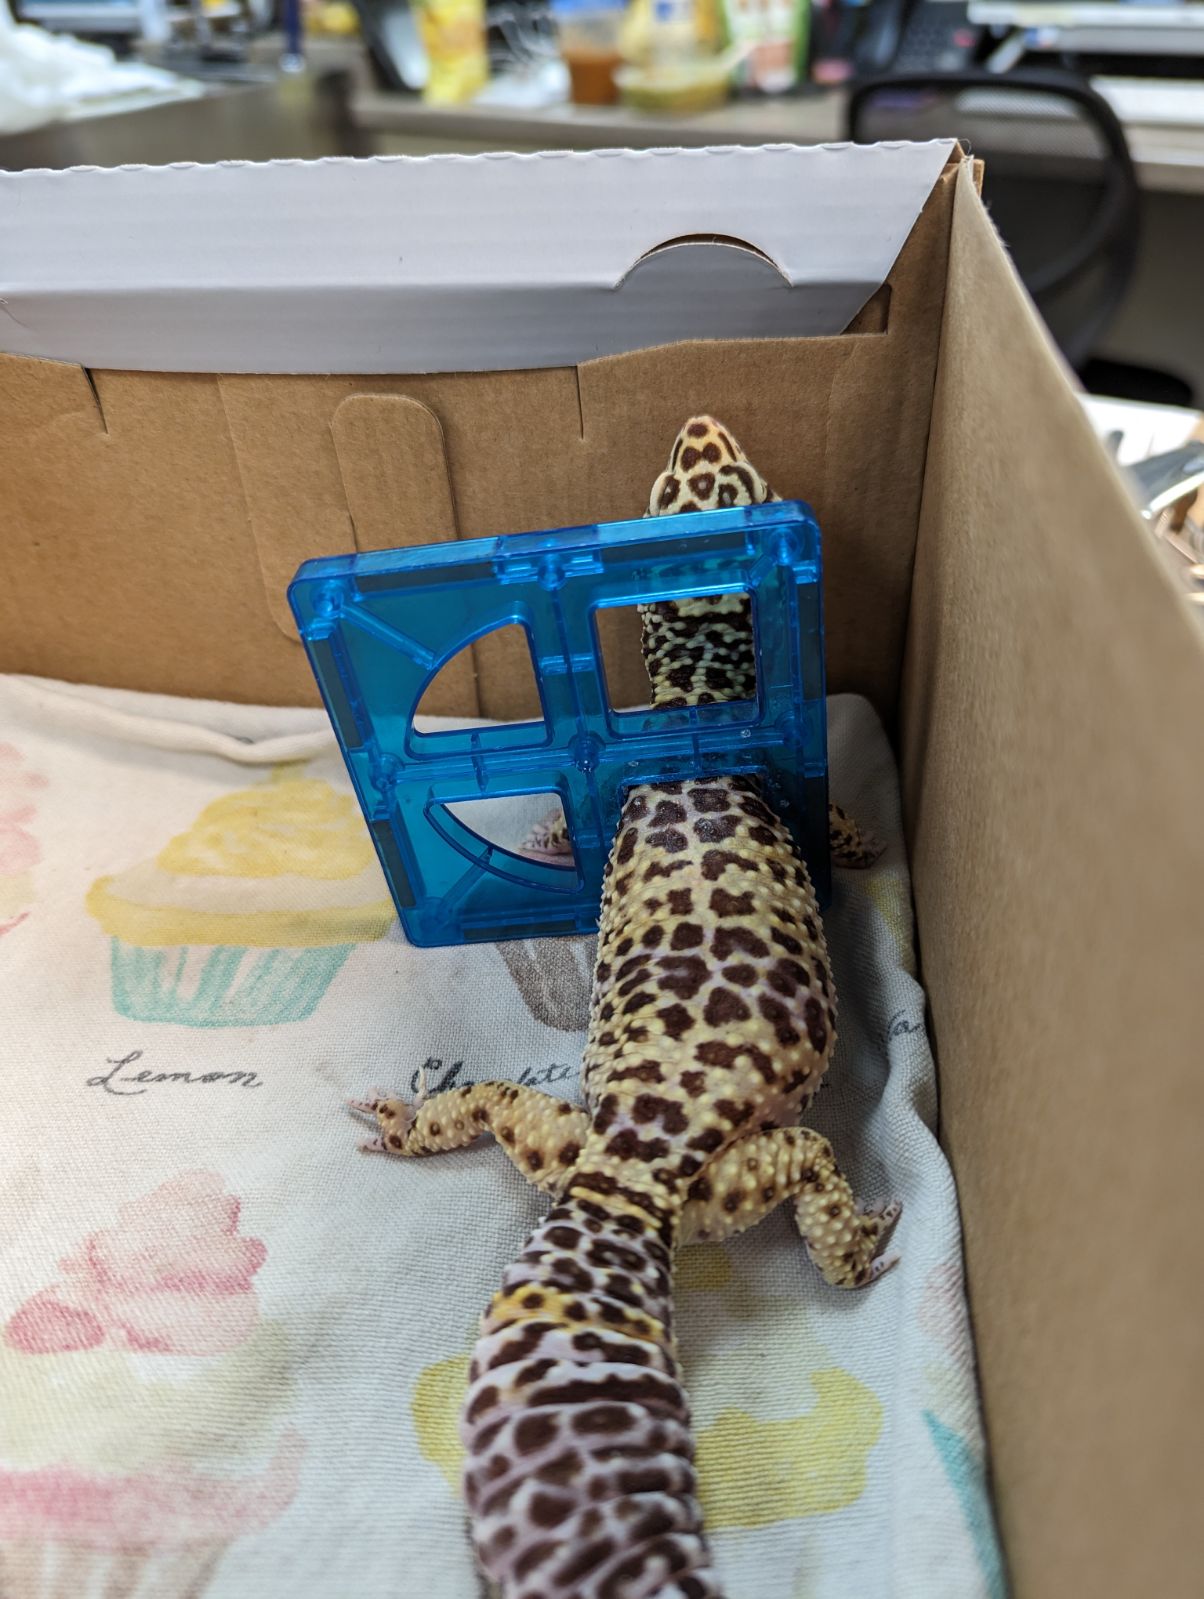 Leopard gecko stuck in a toy